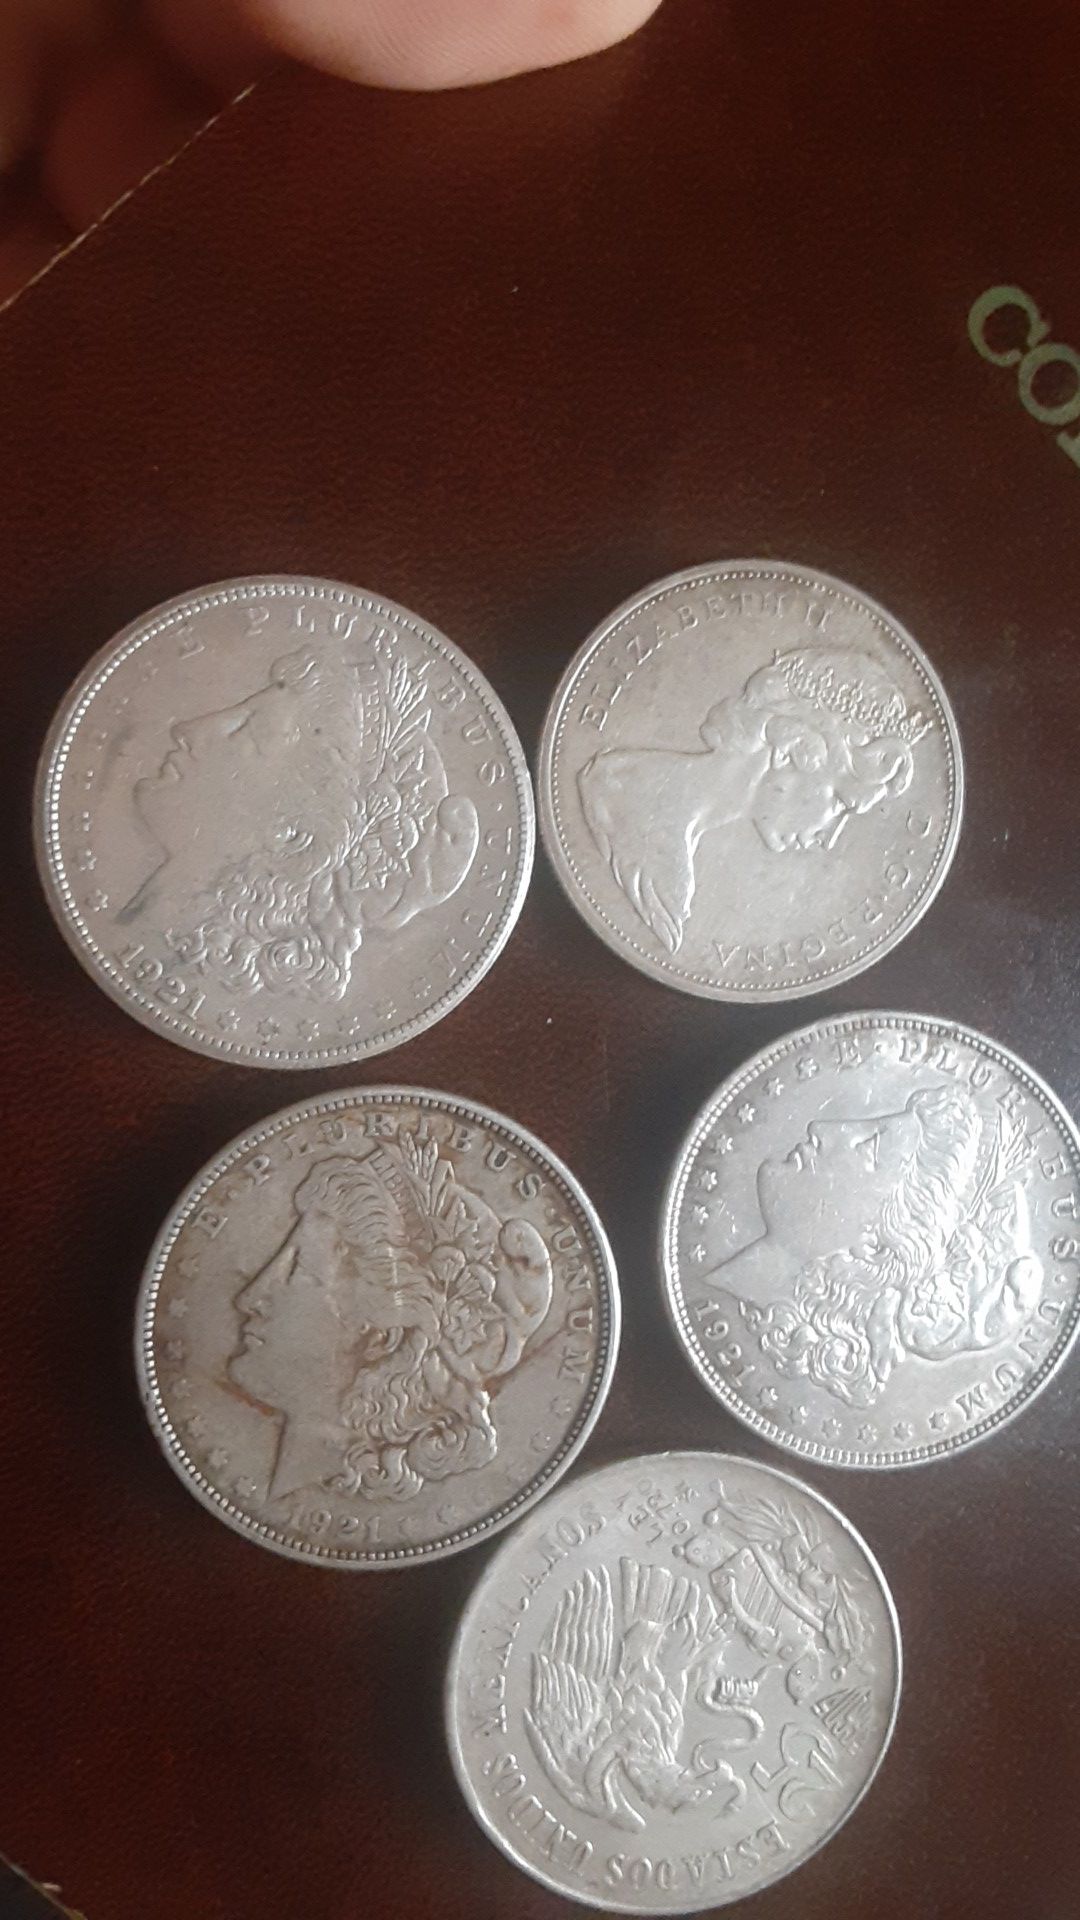 90 percent Silver coins 3 Morgan Dollars 1921